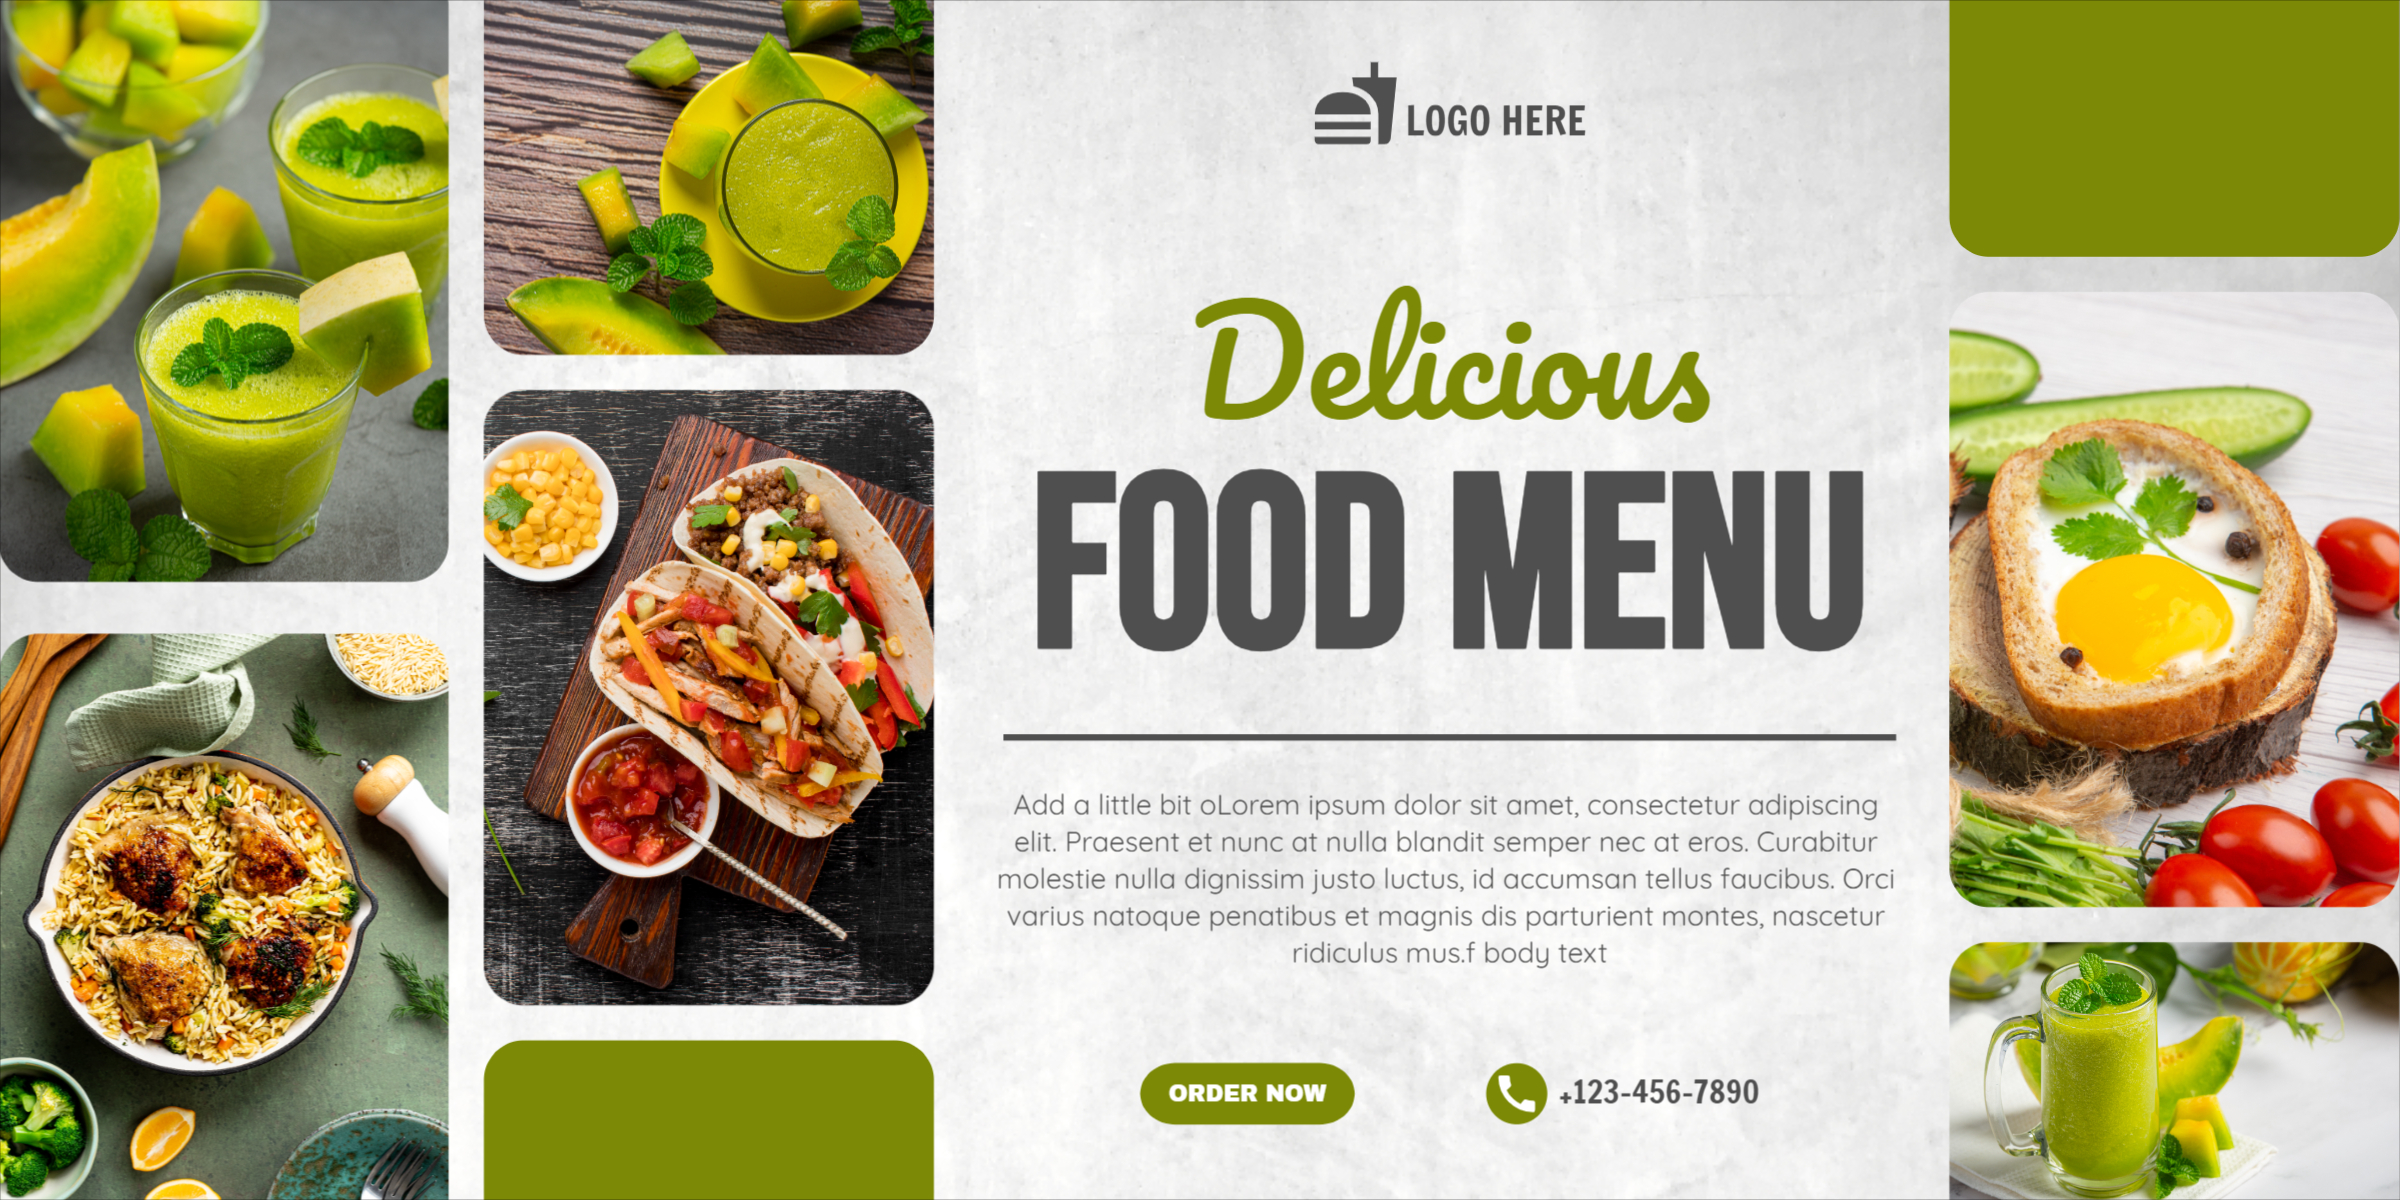 Delicious Food Menu Banner Design download for free